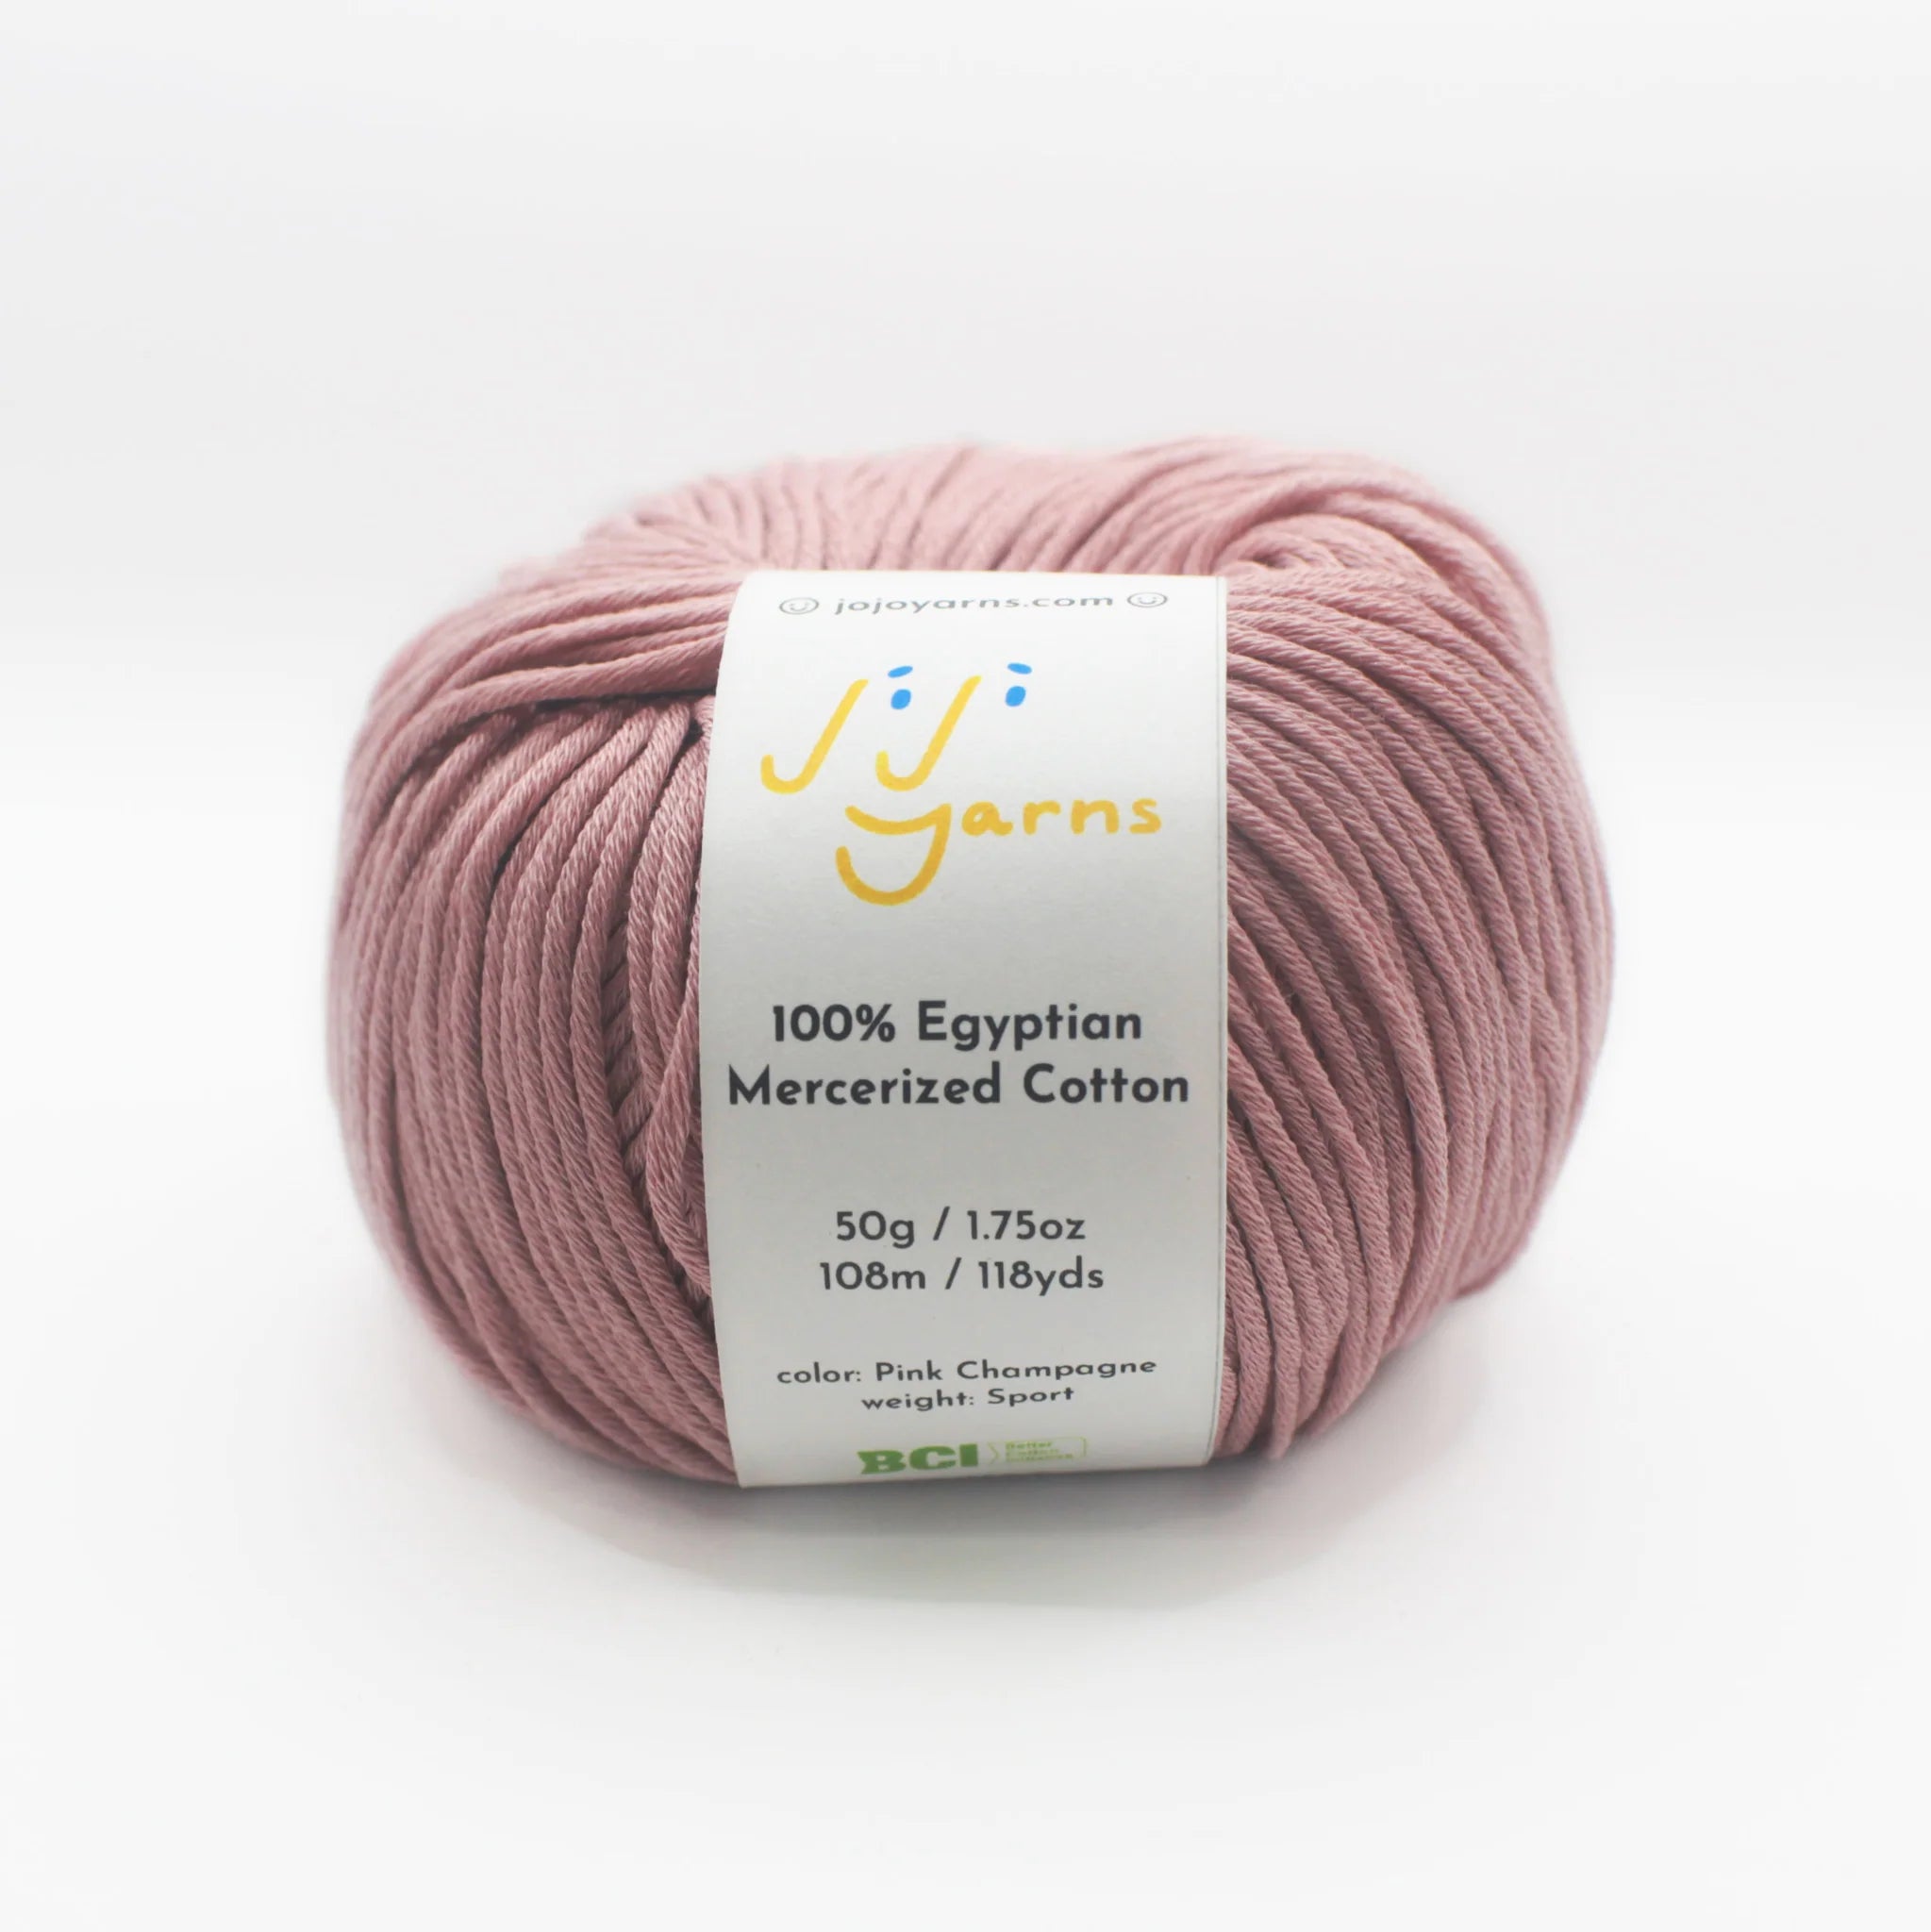 Jojo Yarns 100% Egyptian Mercerized Cotton Yarn Sport Weight